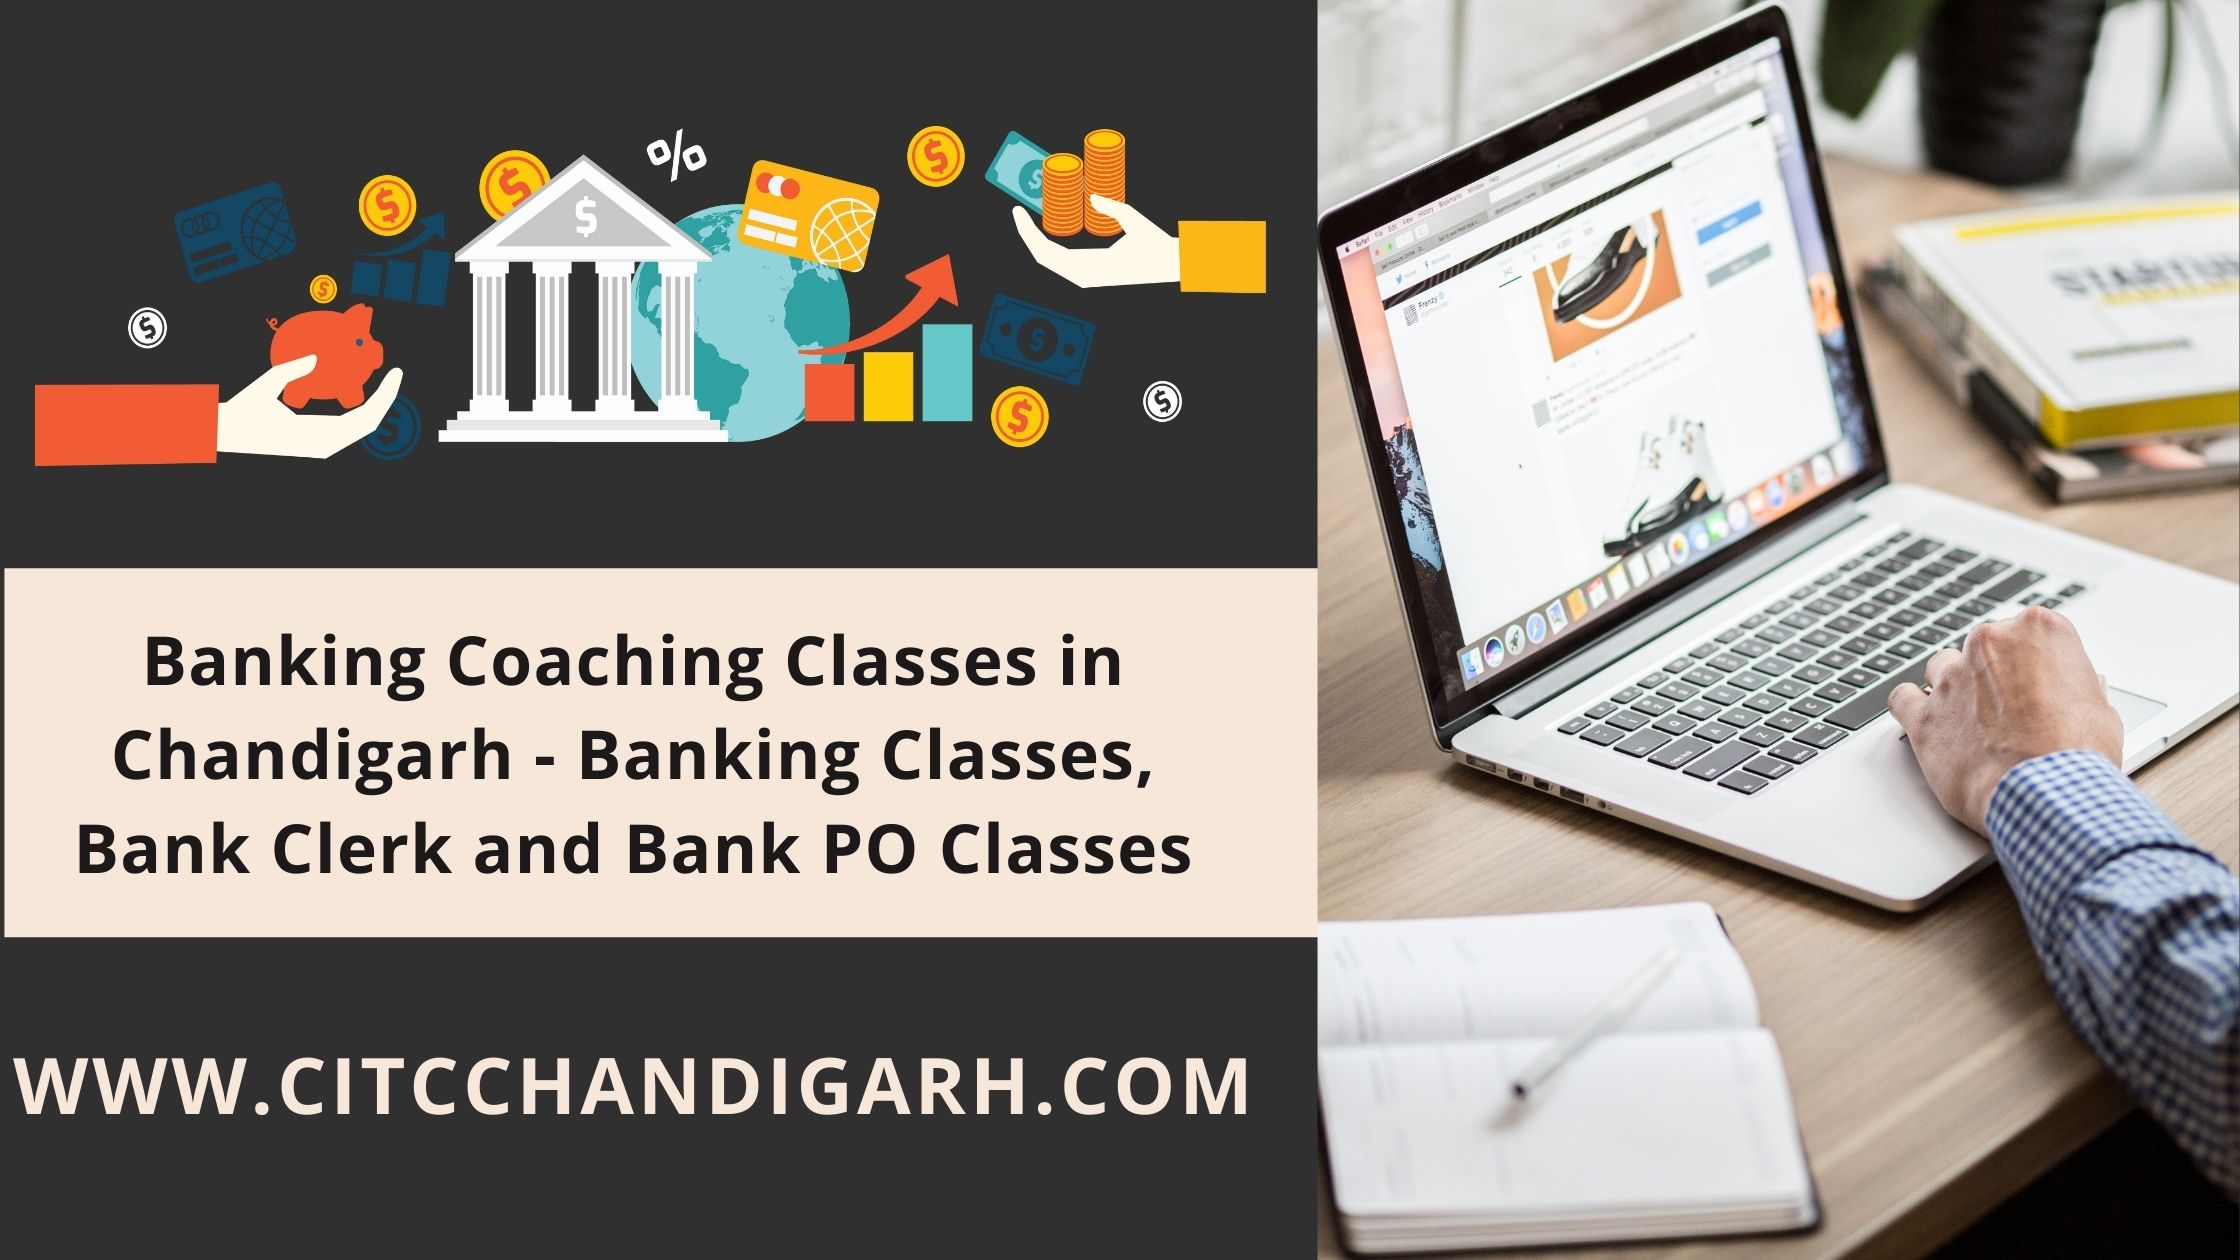 Banking Coaching Classes in Chandigarh